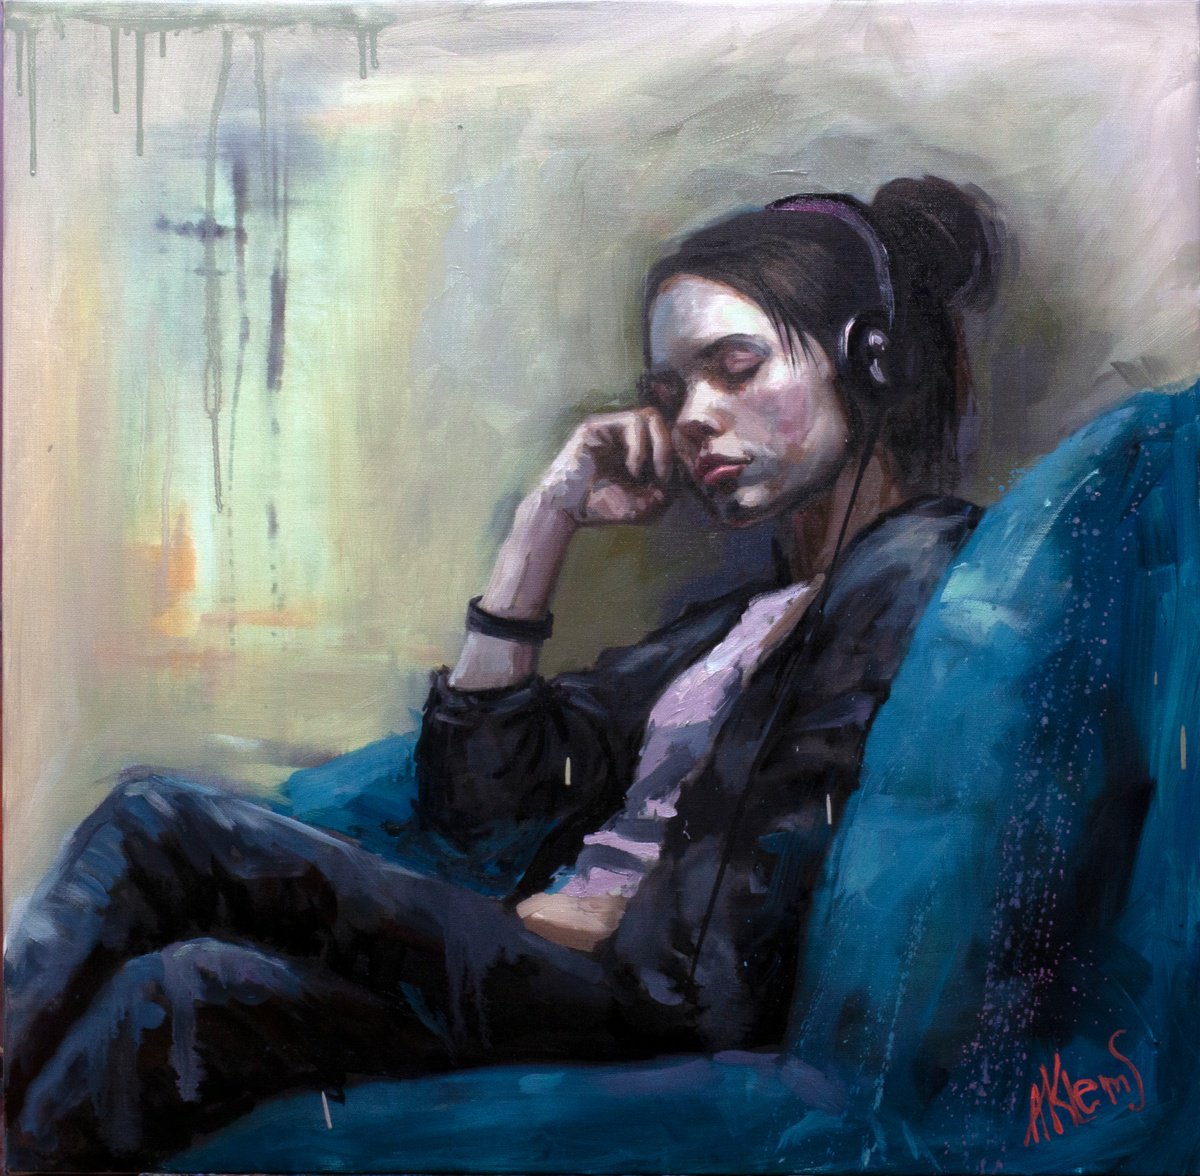 Sleeping Girl with Headphones by Alexandr Klemens